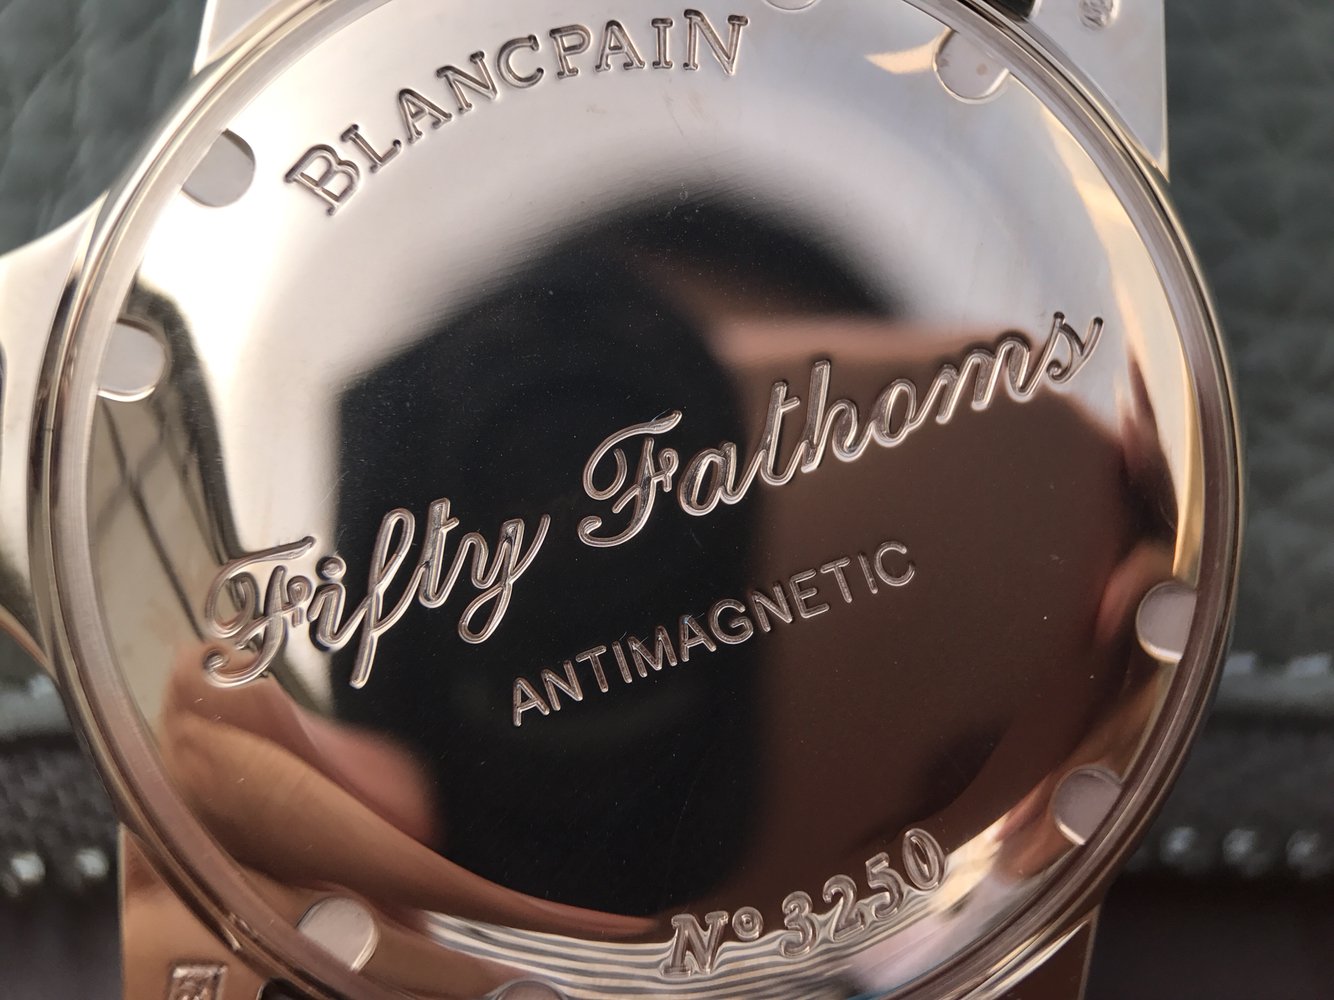 Blancpain Fifty Fathoms 5015-3630-52